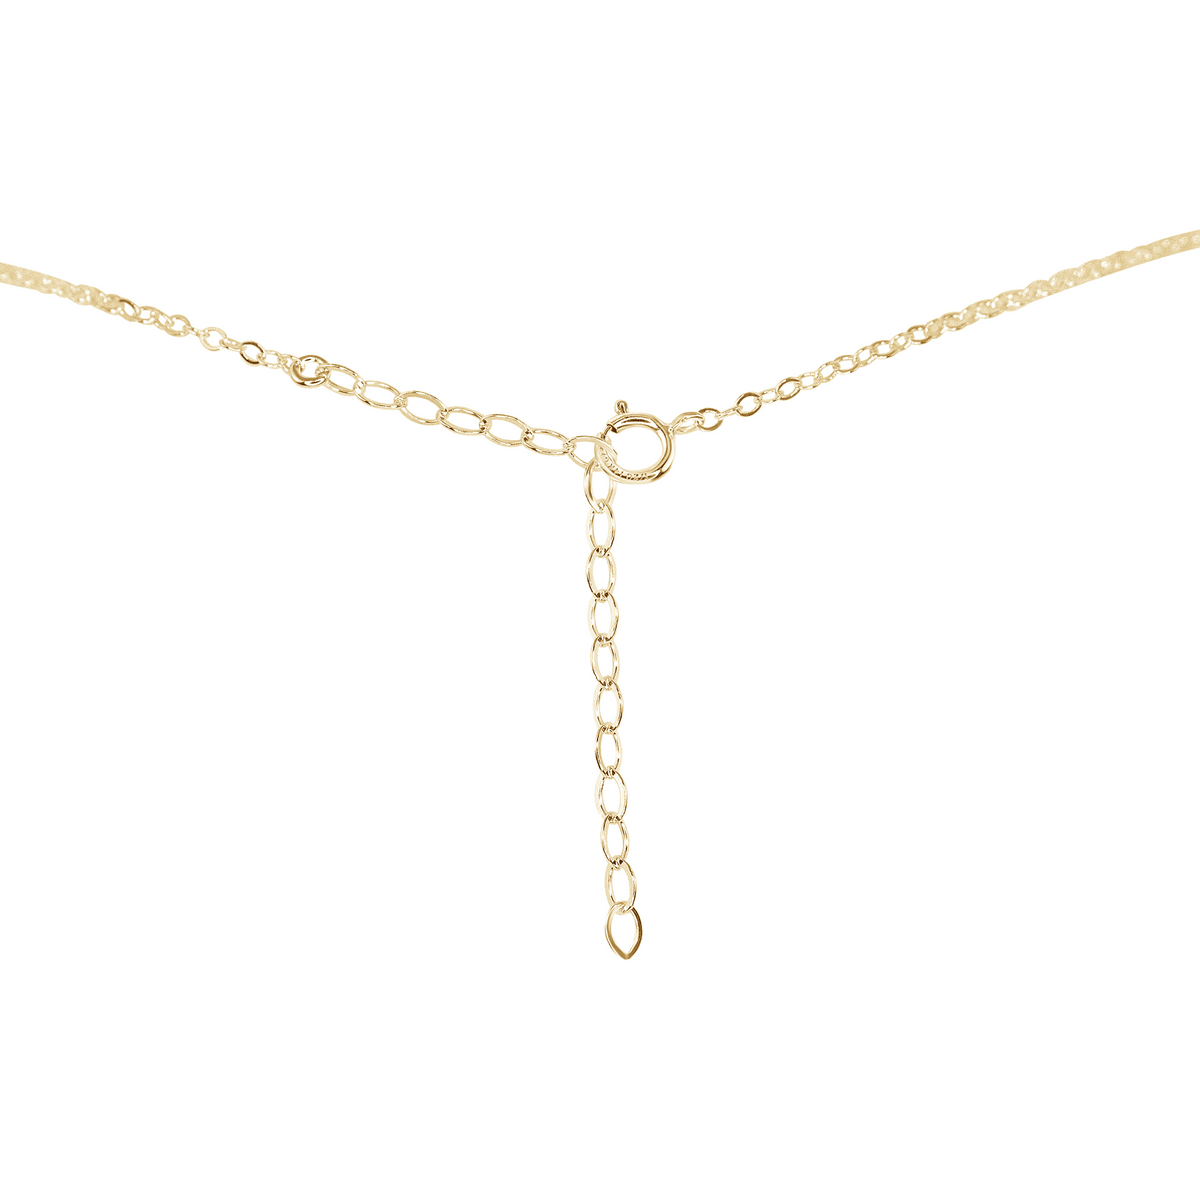 Sparkling Fluorite Faceted Bead Bar Necklace - Sparkling Fluorite Faceted Bead Bar Necklace - 14k Gold Fill - Luna Tide Handmade Crystal Jewellery